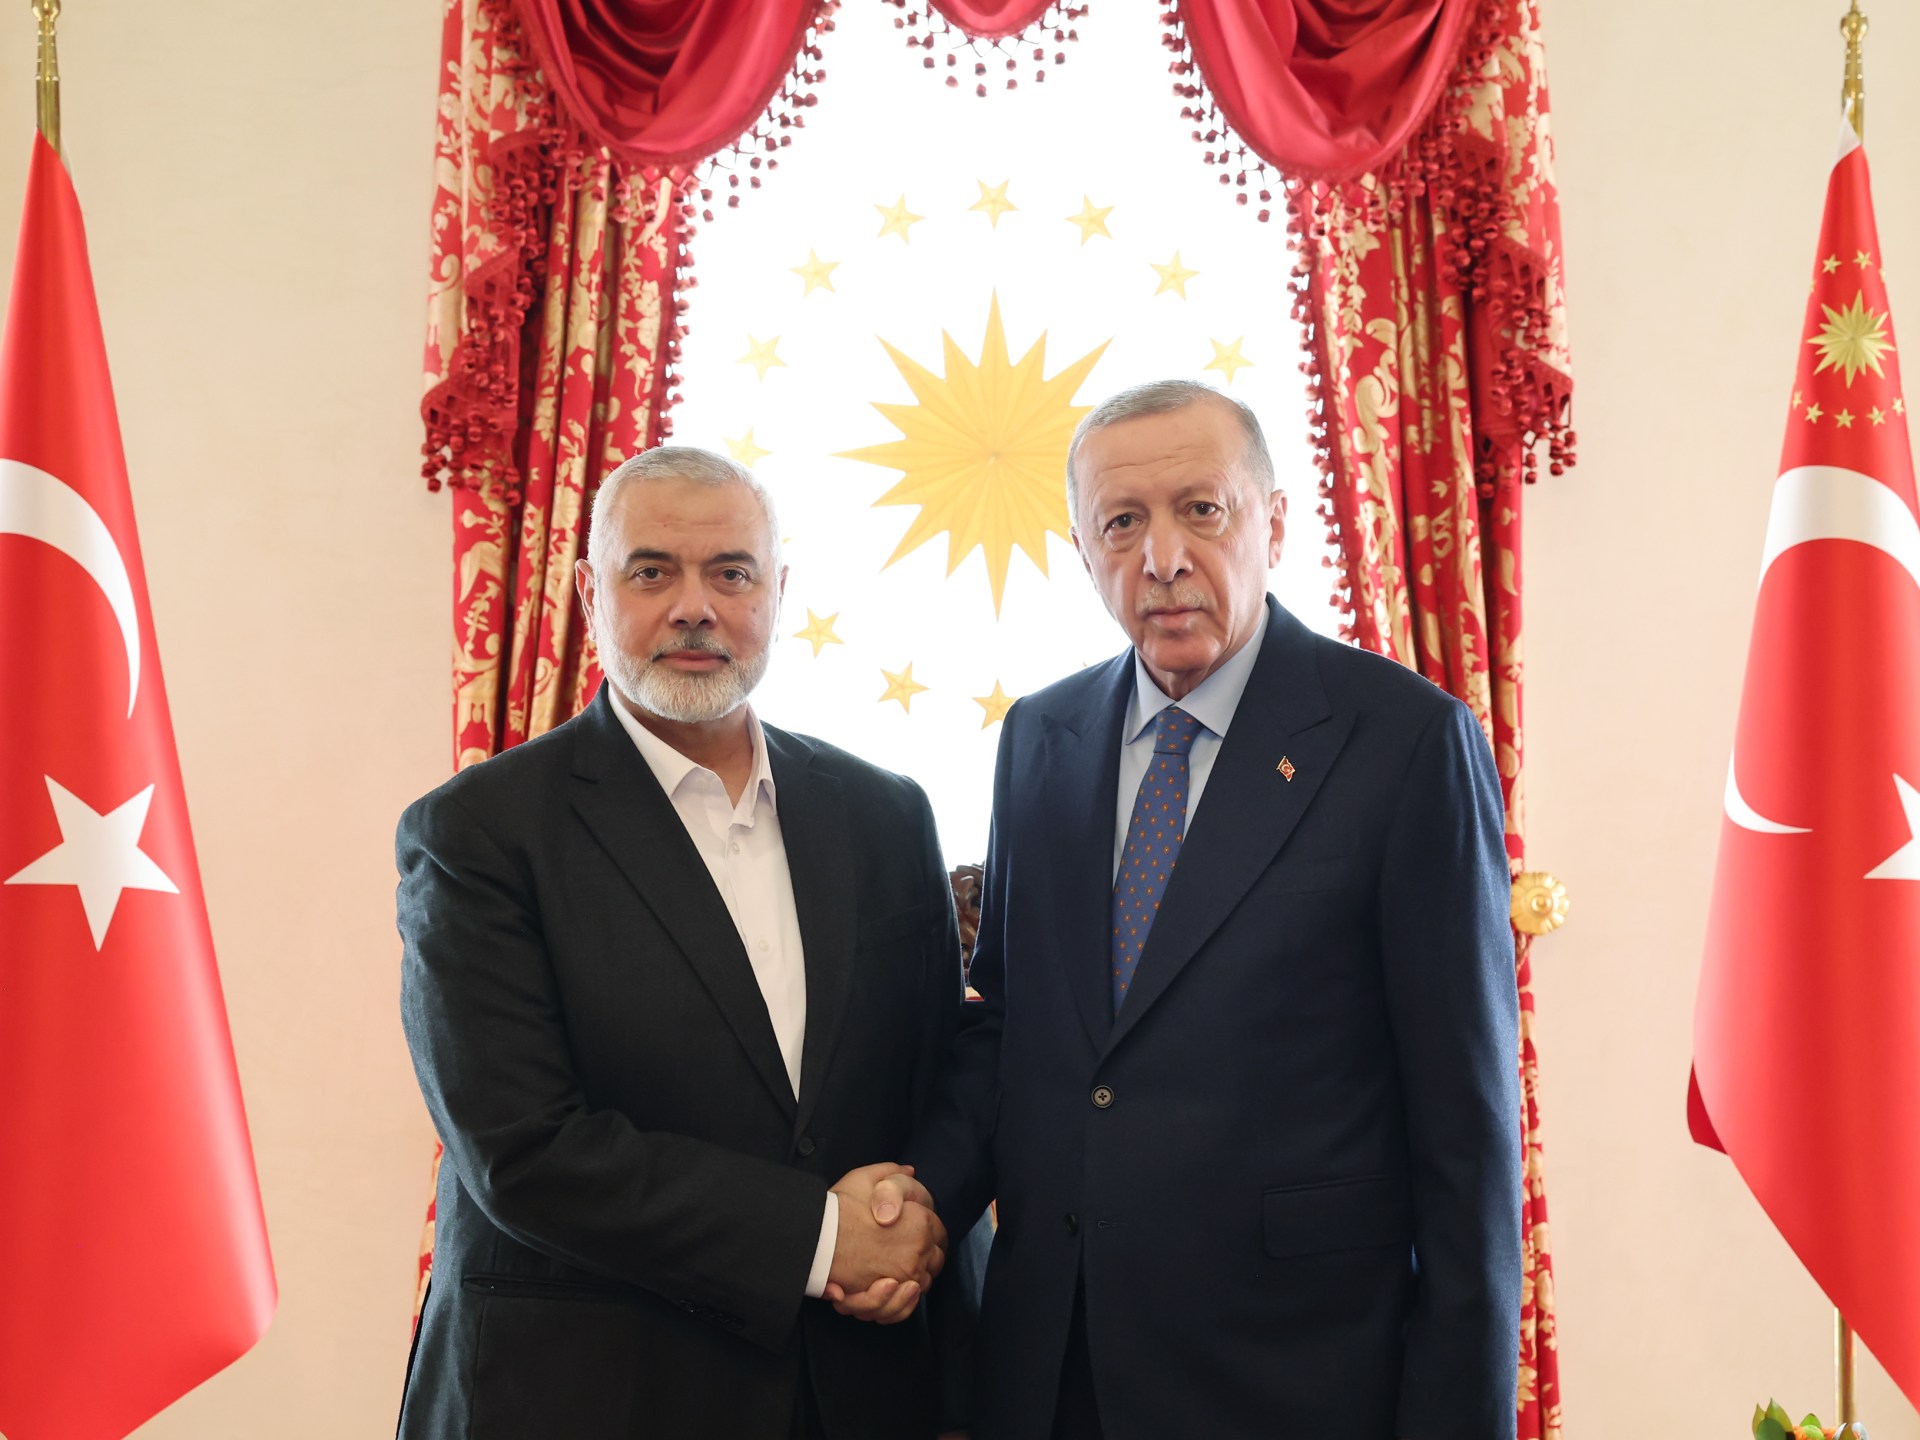 Turkey’s Erdogan urges Palestinian unity after meeting Hamas chief